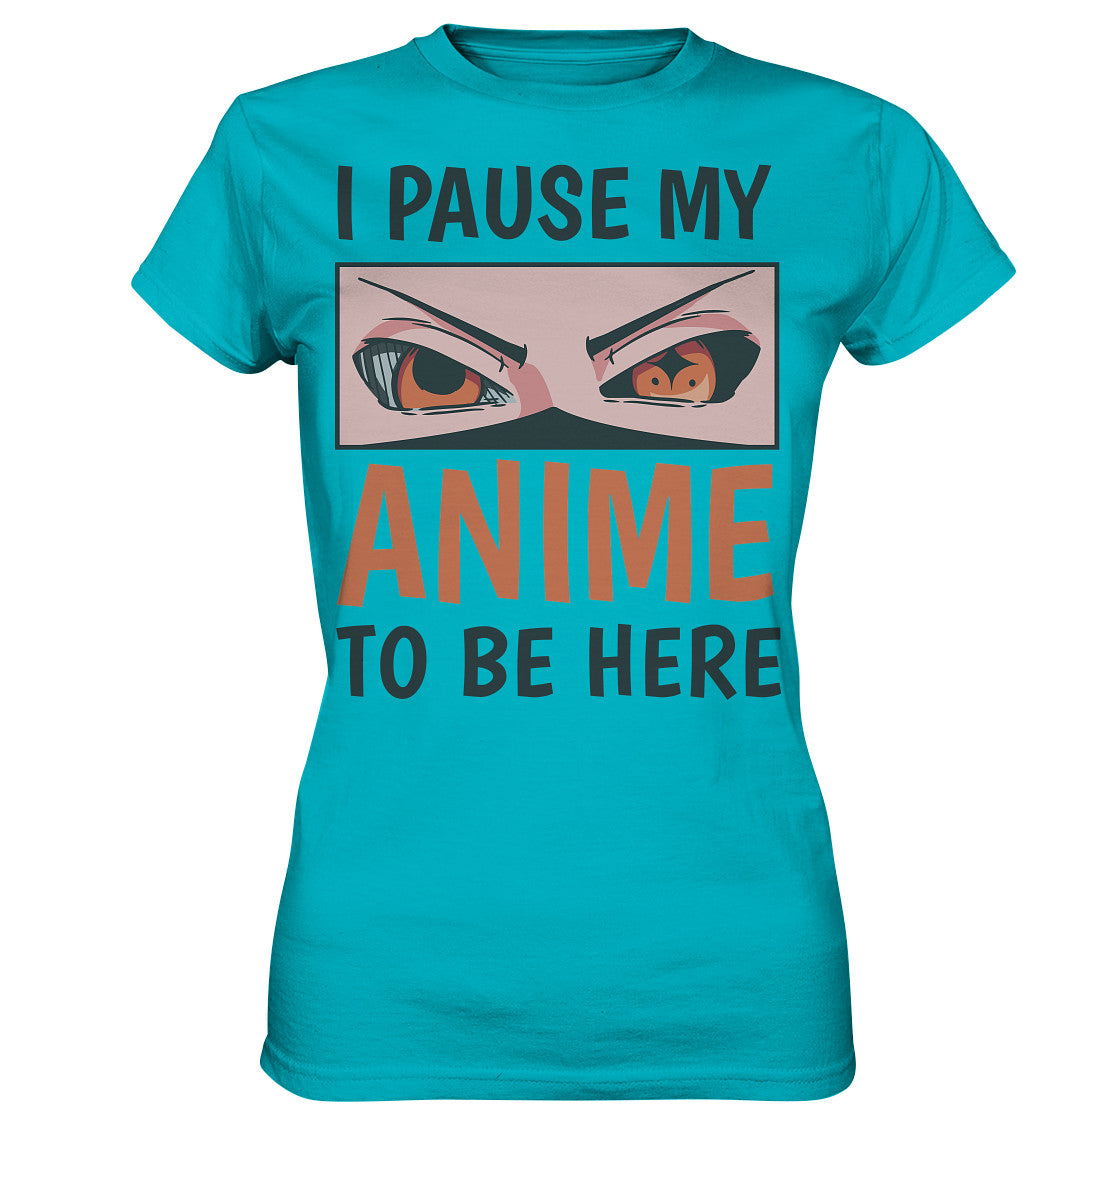 Pause my Anime - Damen Premium Shirt